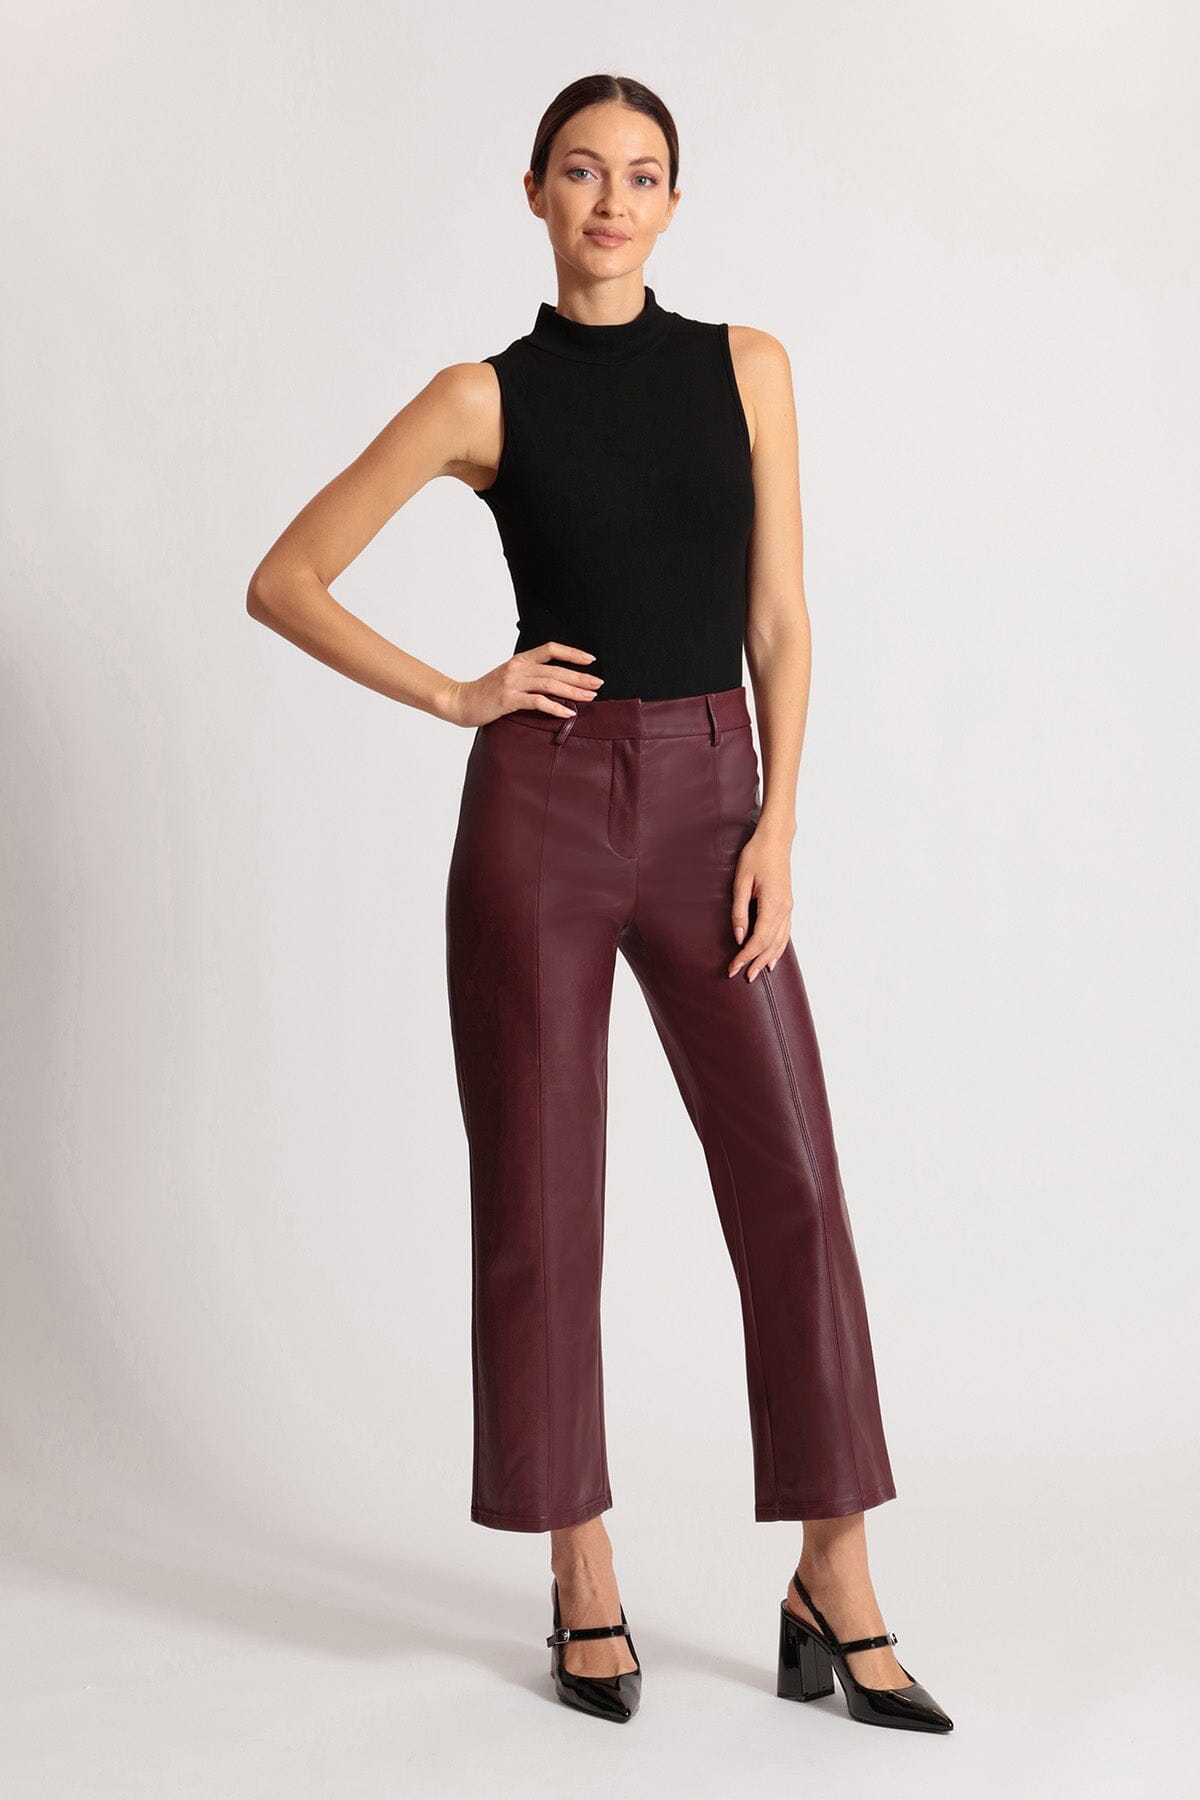 GANT Dark Red Slim Fit 100% Wool Suit Pants Trousers Size EU 52 UK/US 42 |  eBay